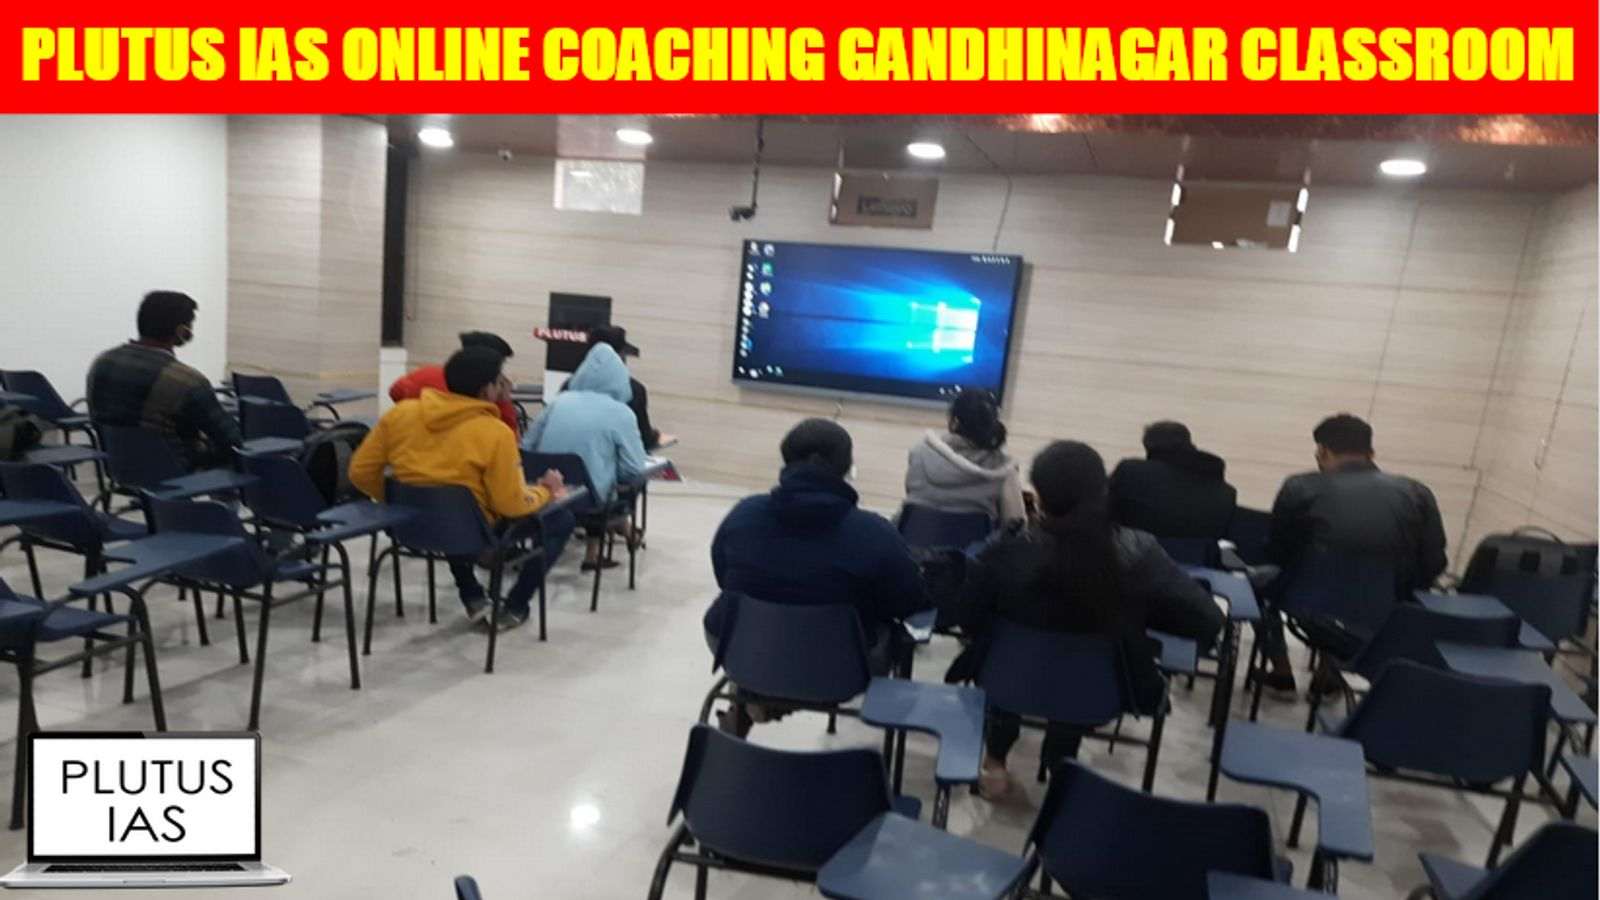 Plutus IAS Online Coaching Gandhinagar Class Room